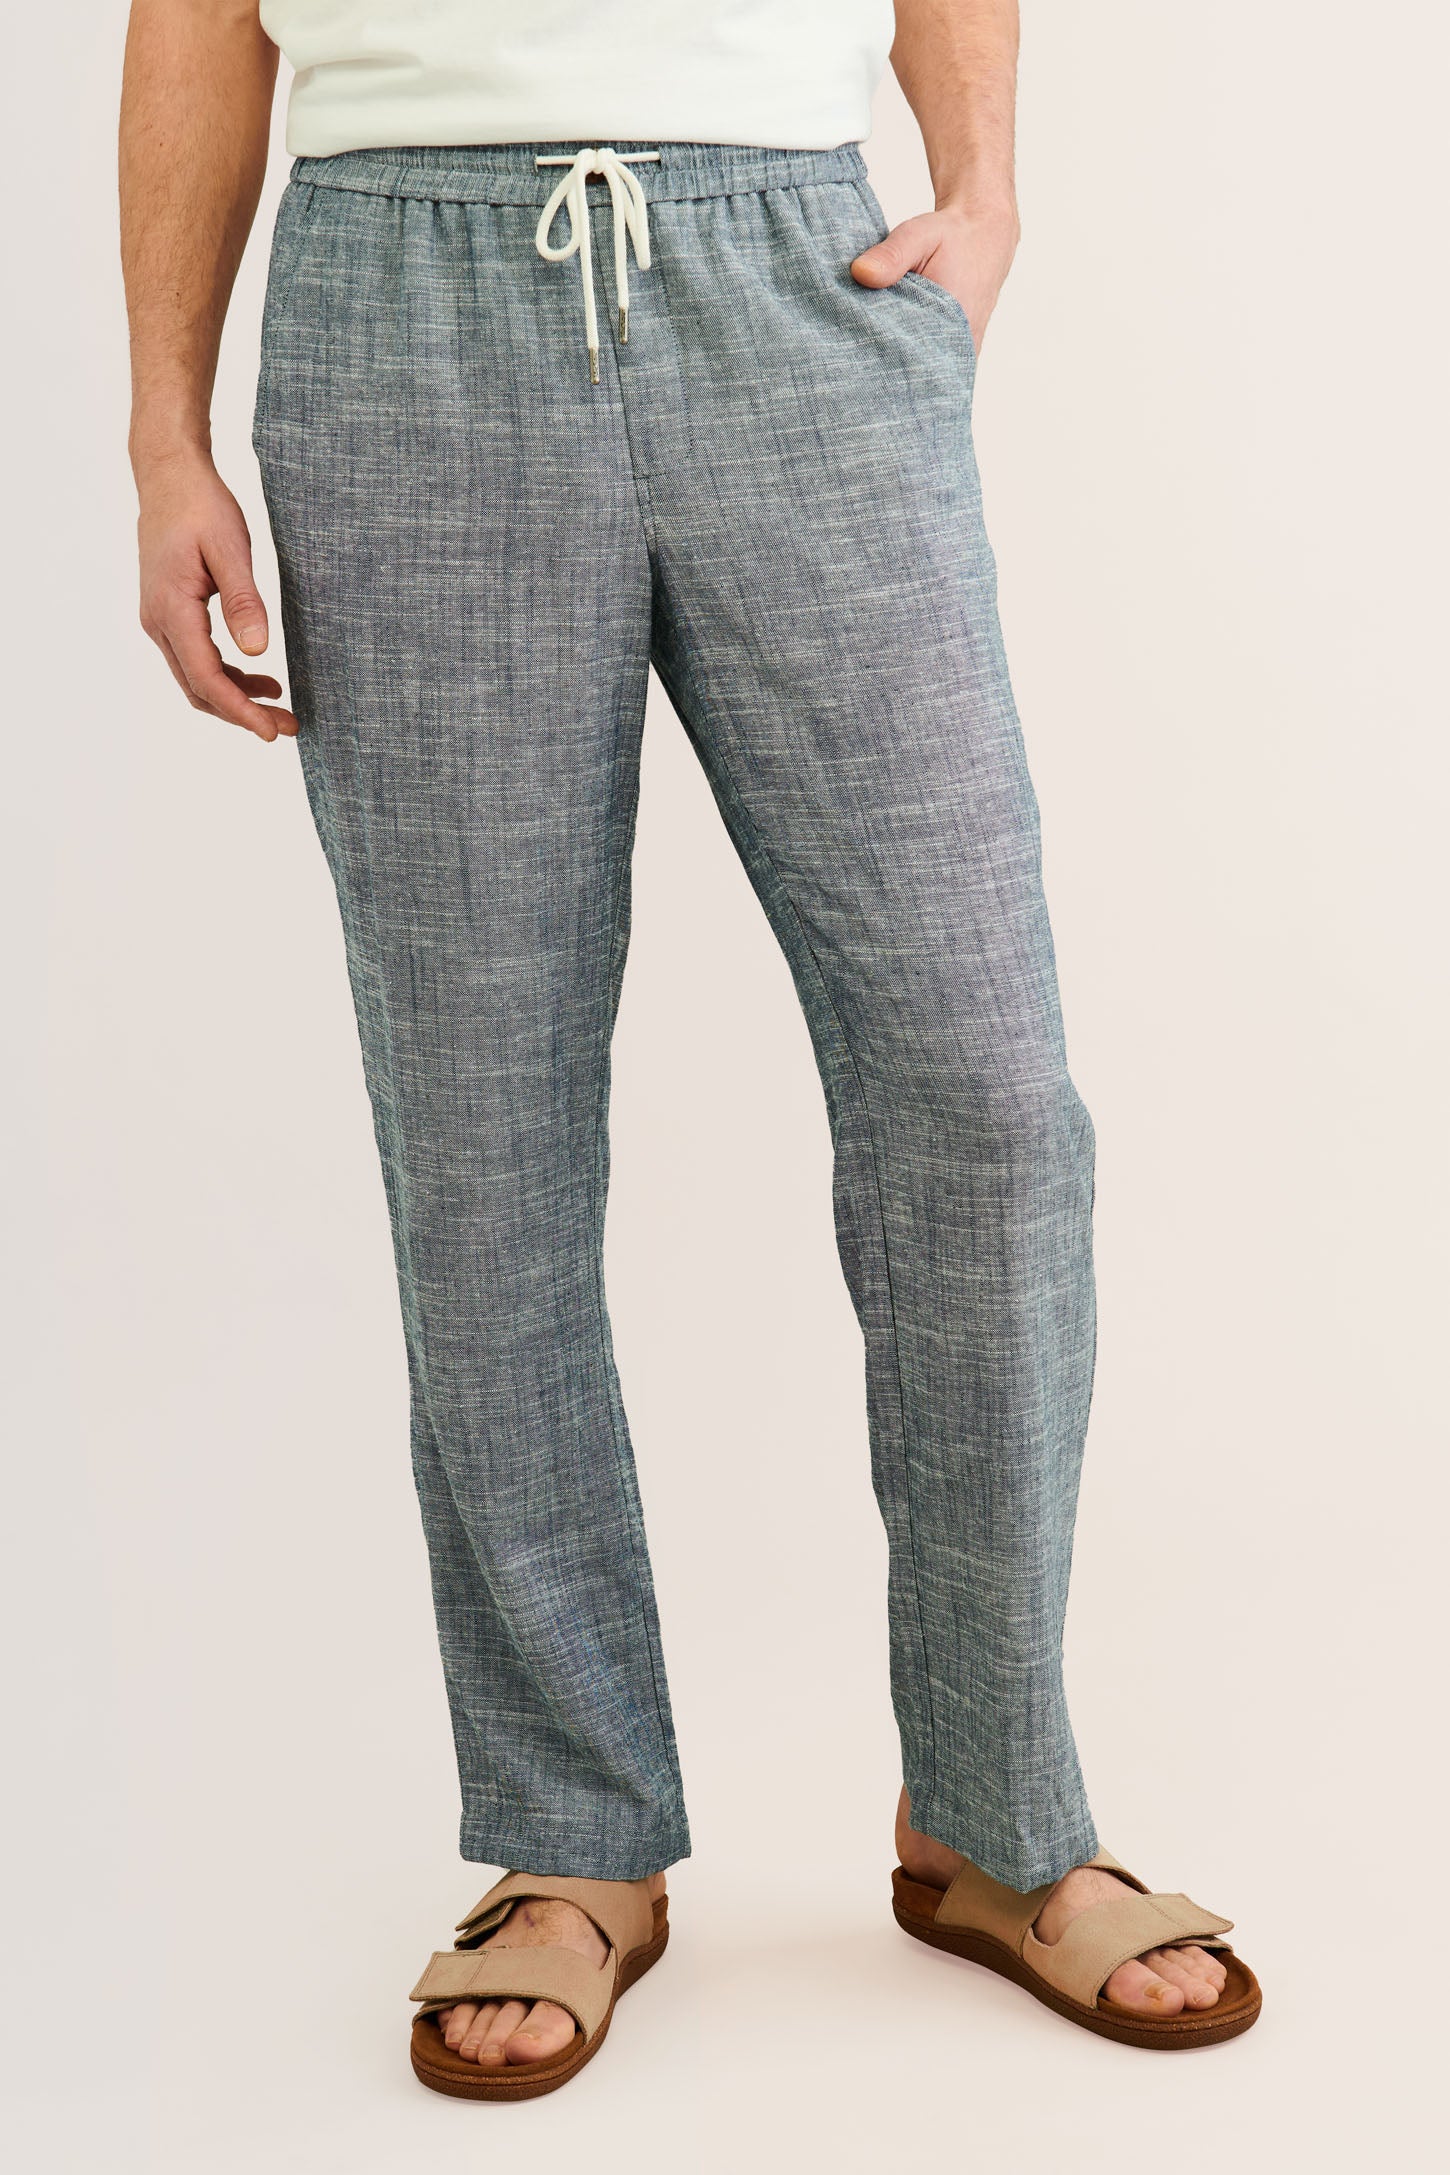 Amalfi Sage Cotton and Linen Stretch Drawstring Pant - Custom Fit Pants